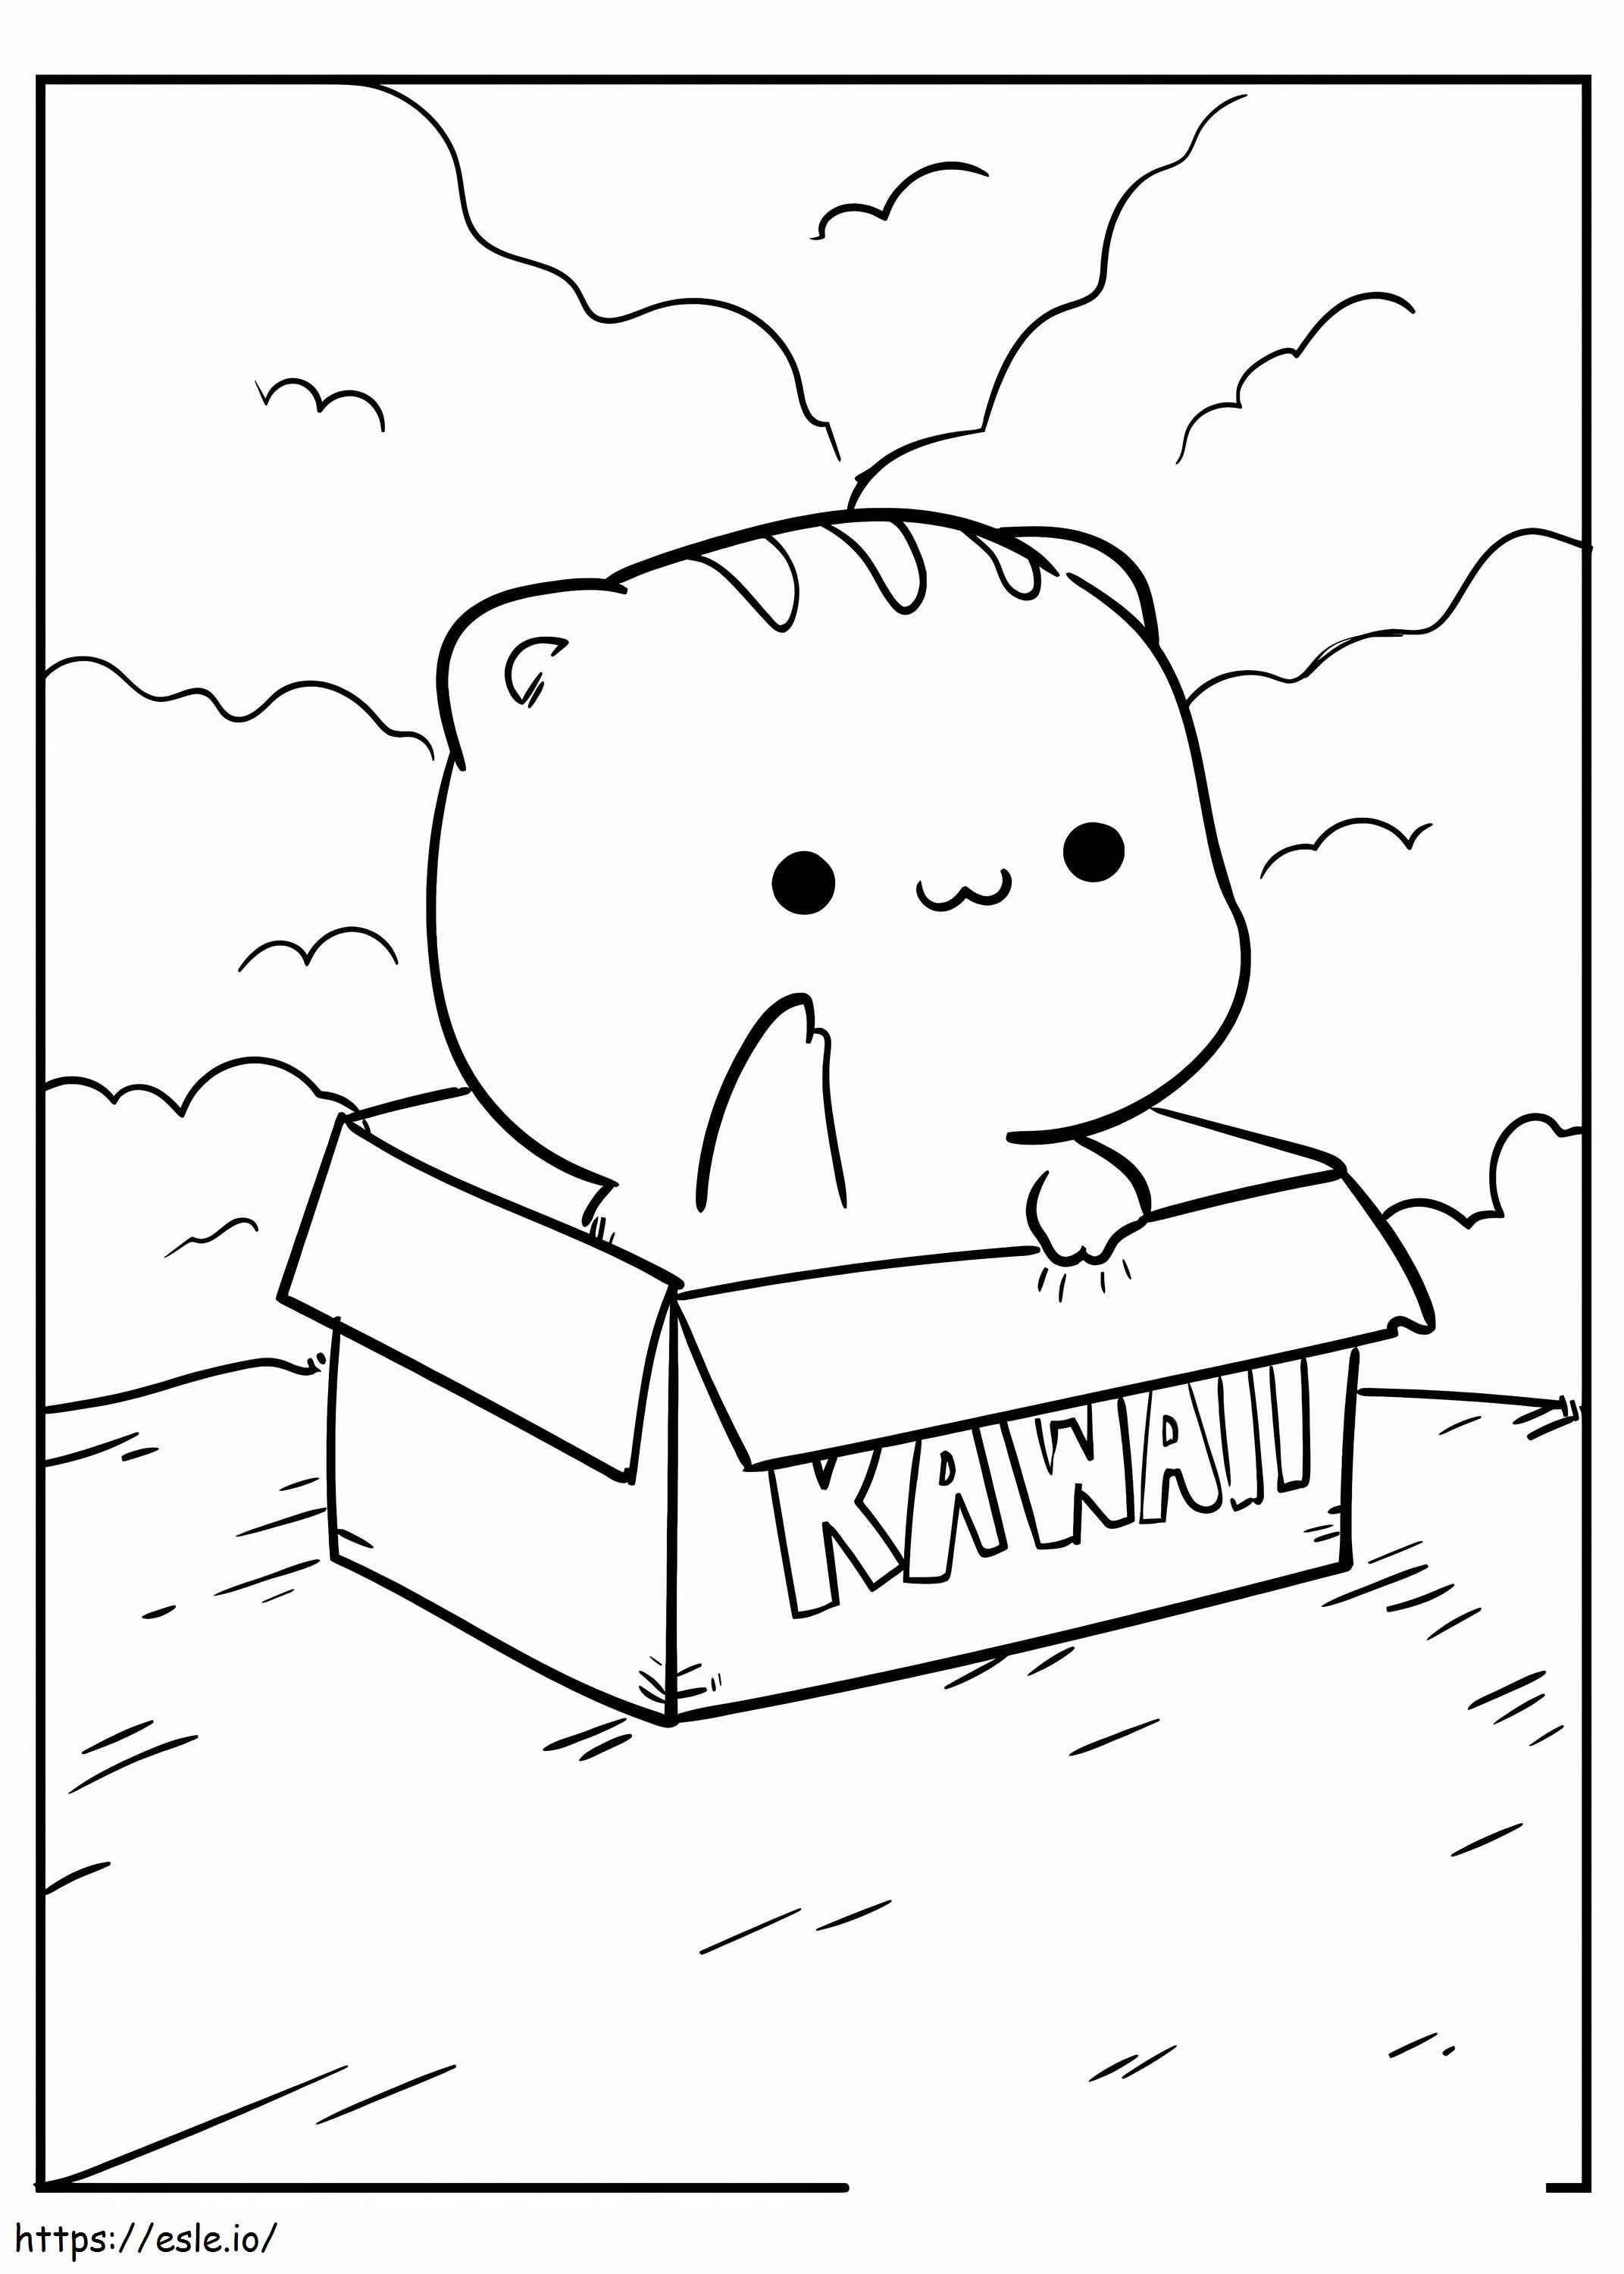 Gato sorrindo kawaii para colorir